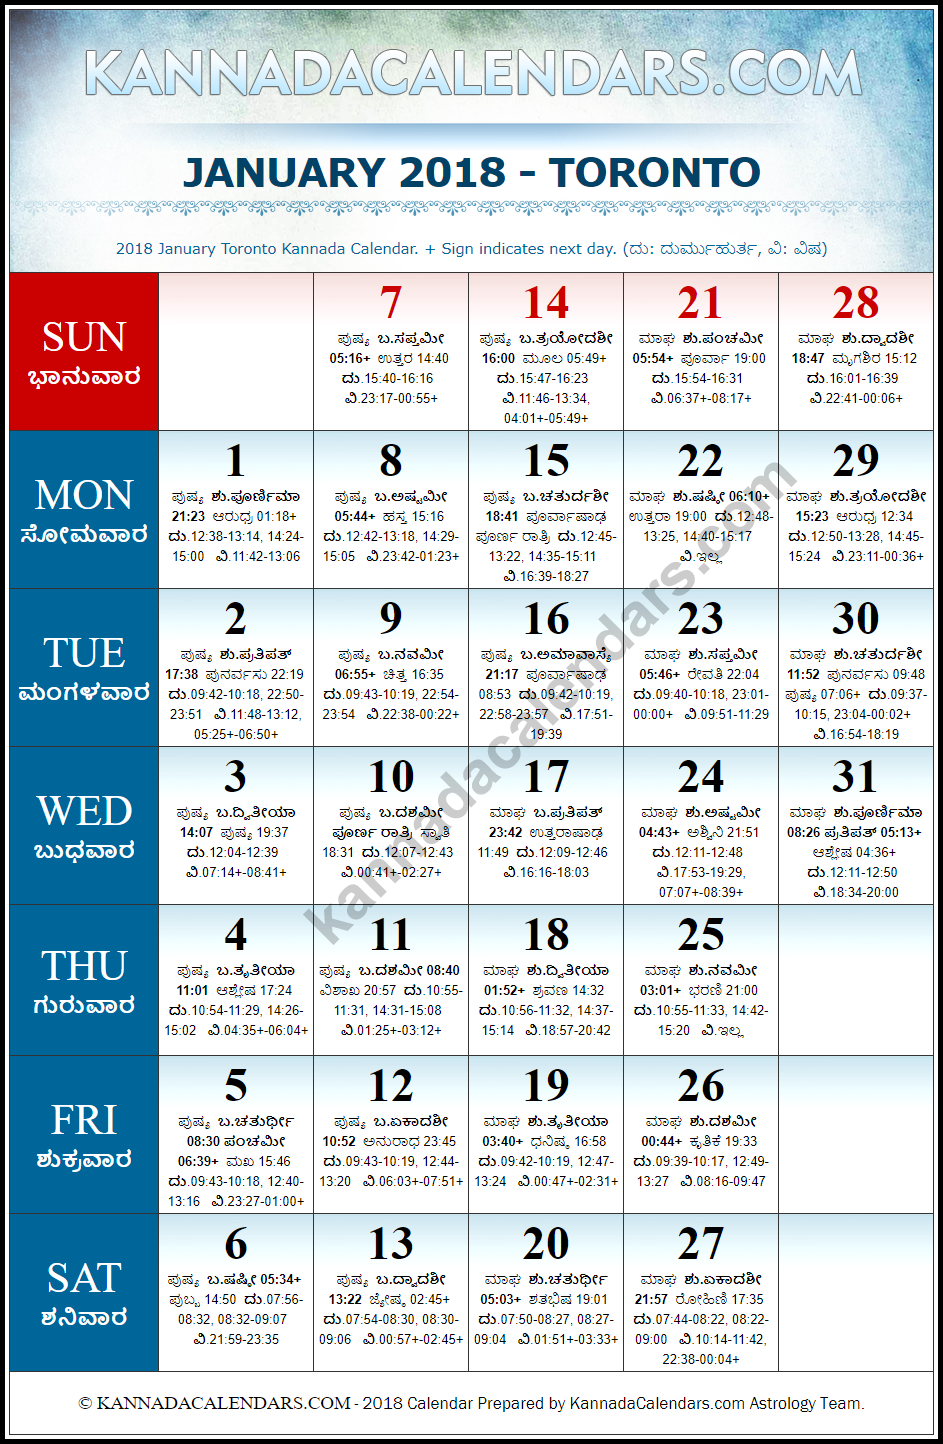 January 2018 Kannada Calendar for Toronto, Canada